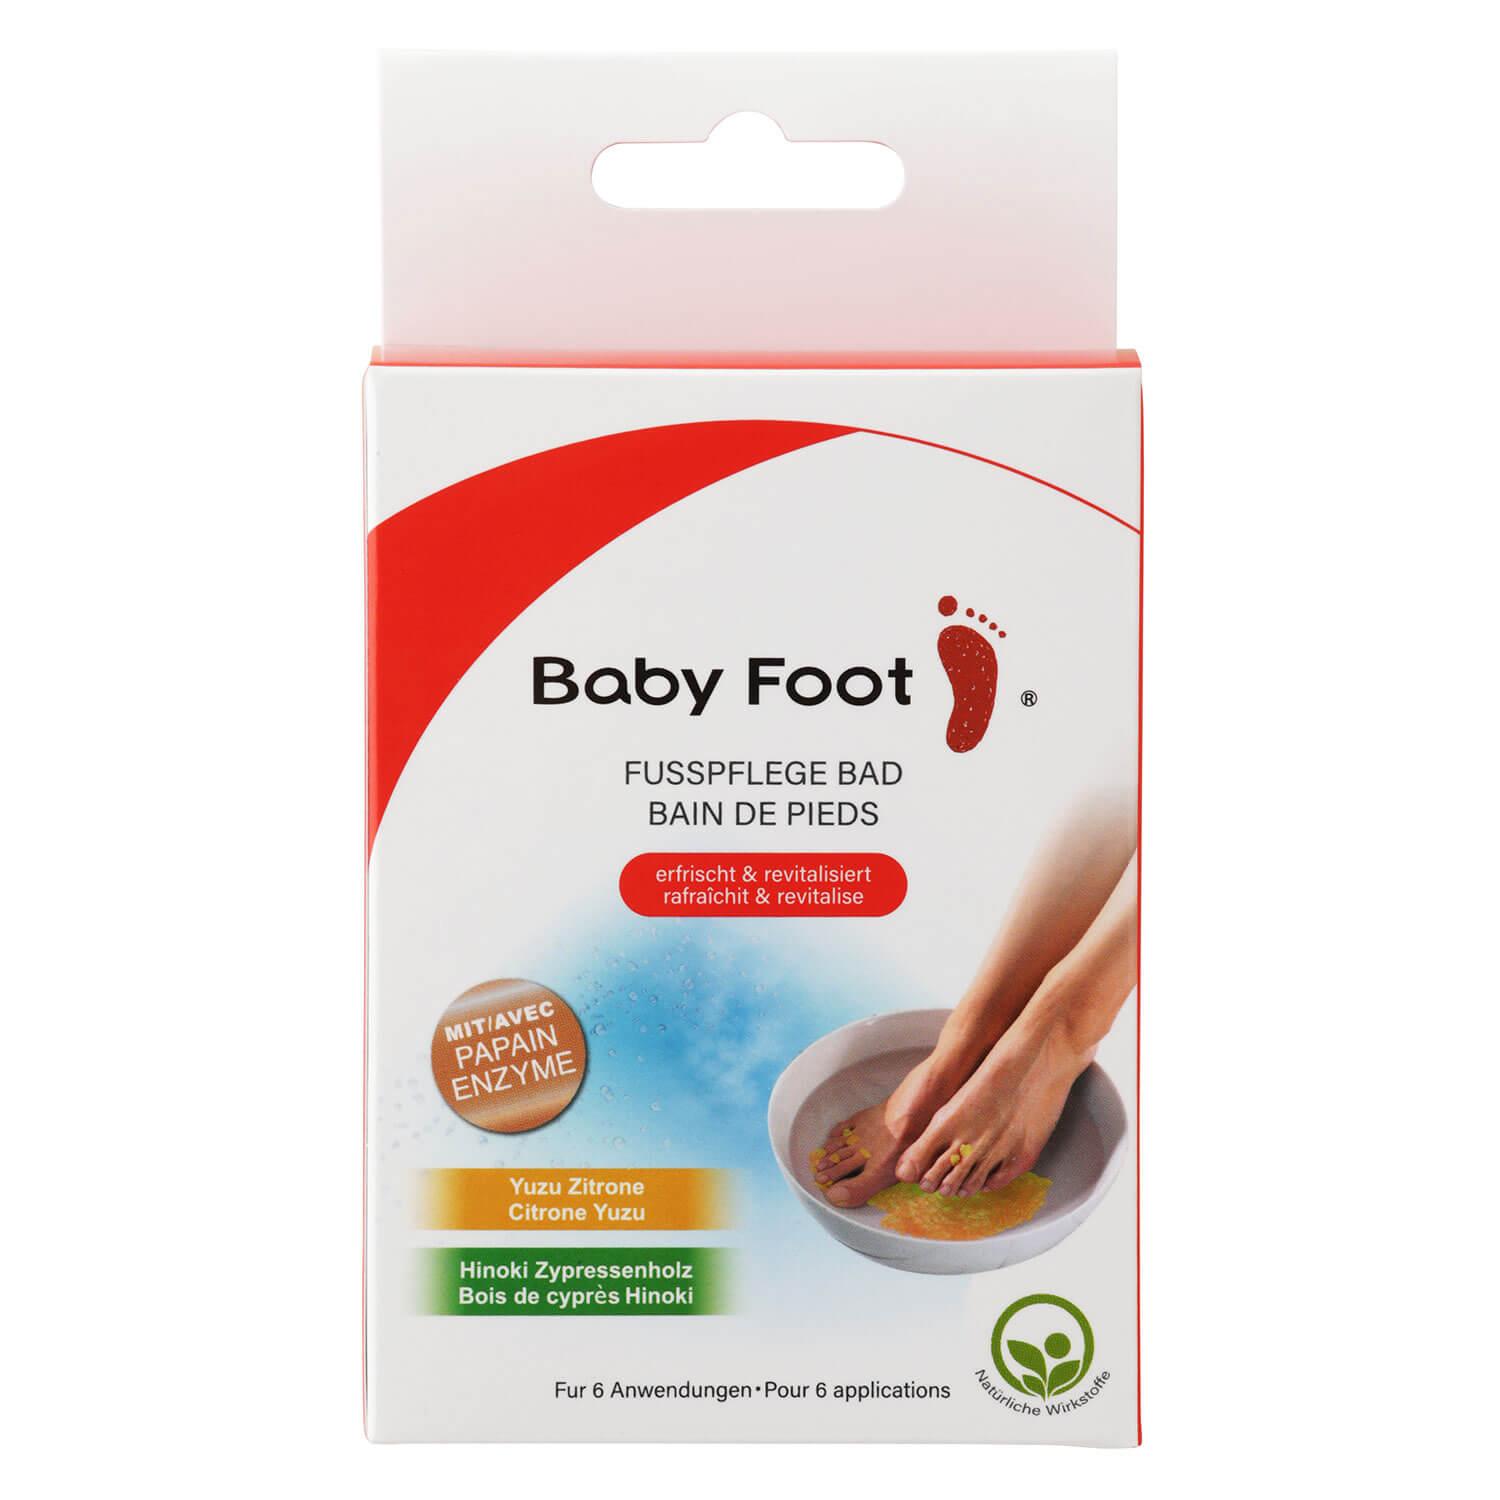 Baby Foot - Foot Smoothing Bath Spa